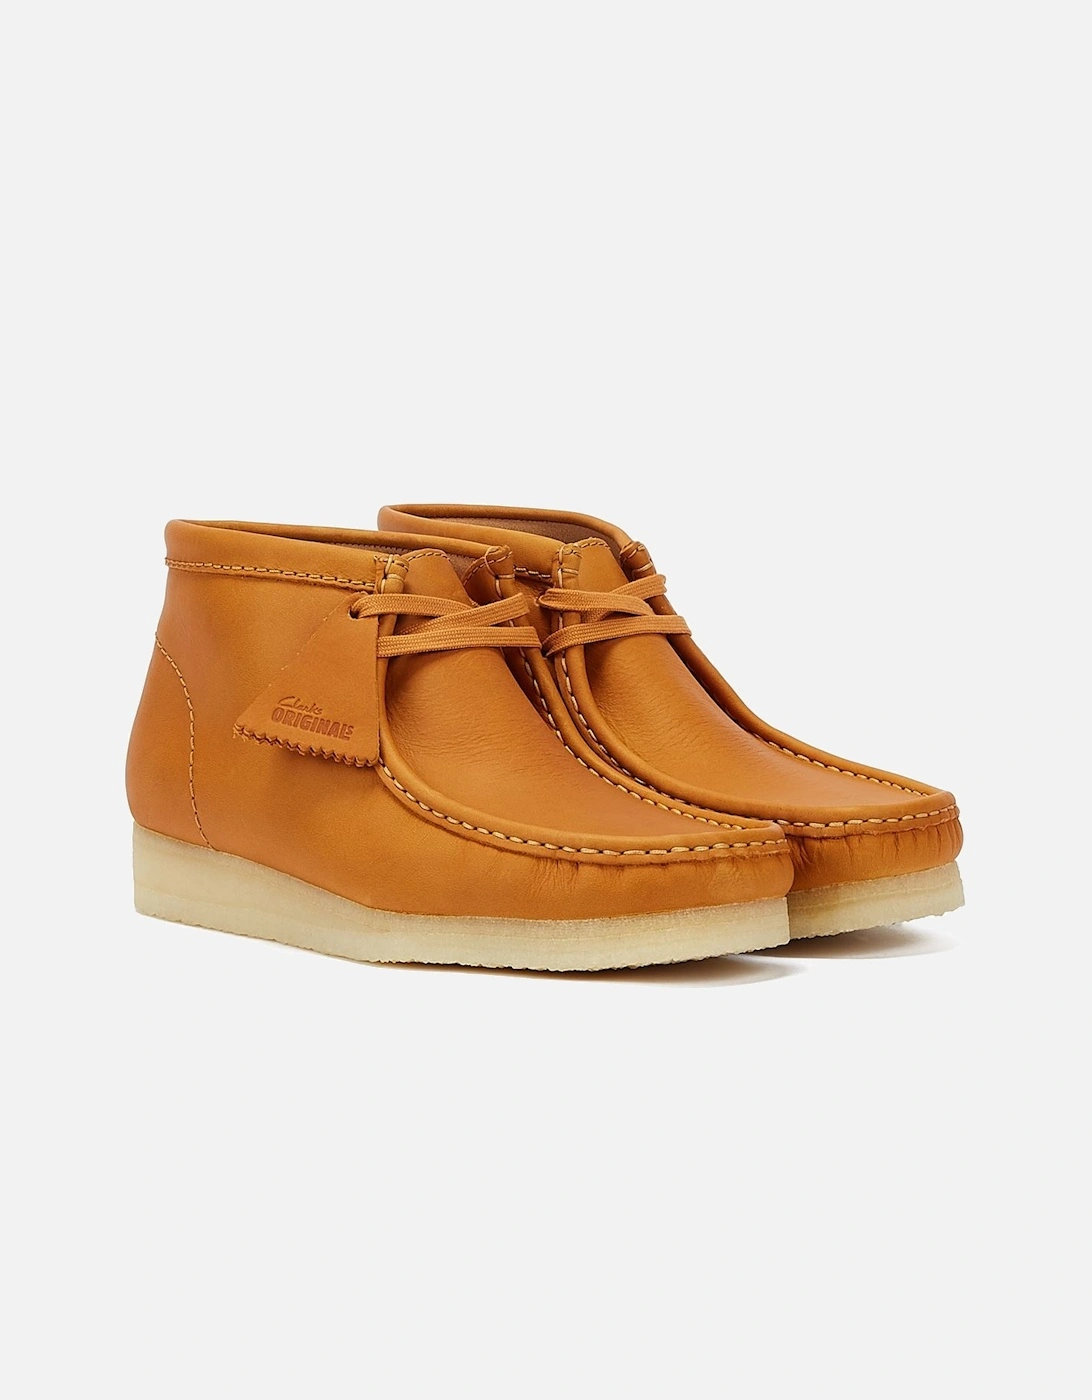 Originals Wallabee Mid Tan Leather Men's Orange Boots, 9 of 8